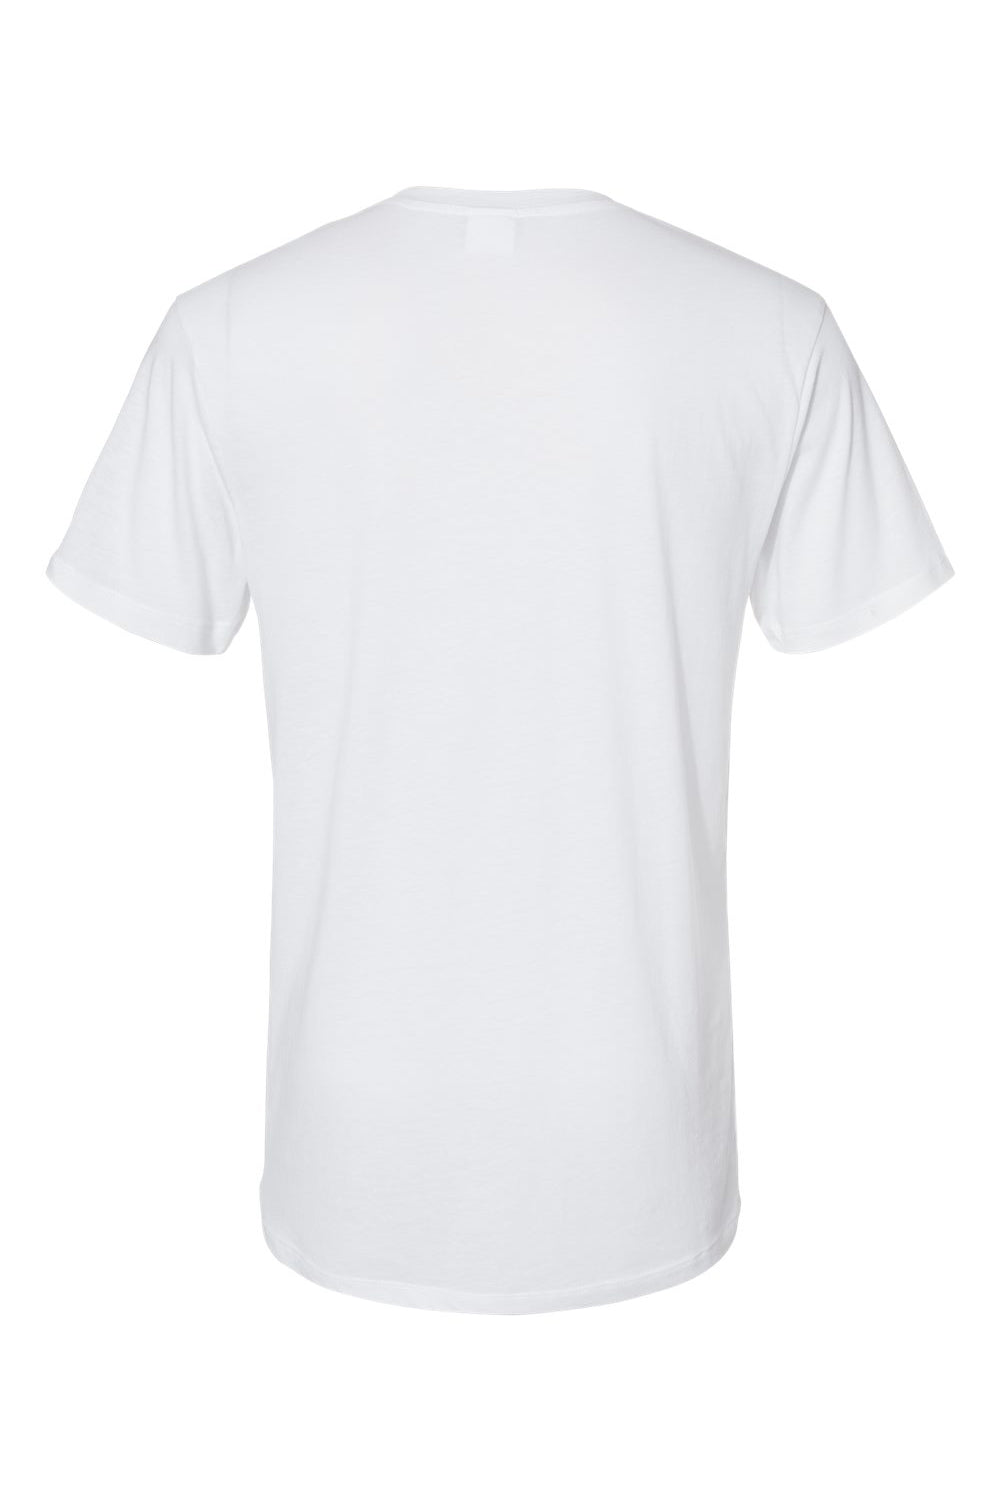 Augusta Sportswear 3065 Mens Short Sleeve Crewneck T-Shirt White Flat Back